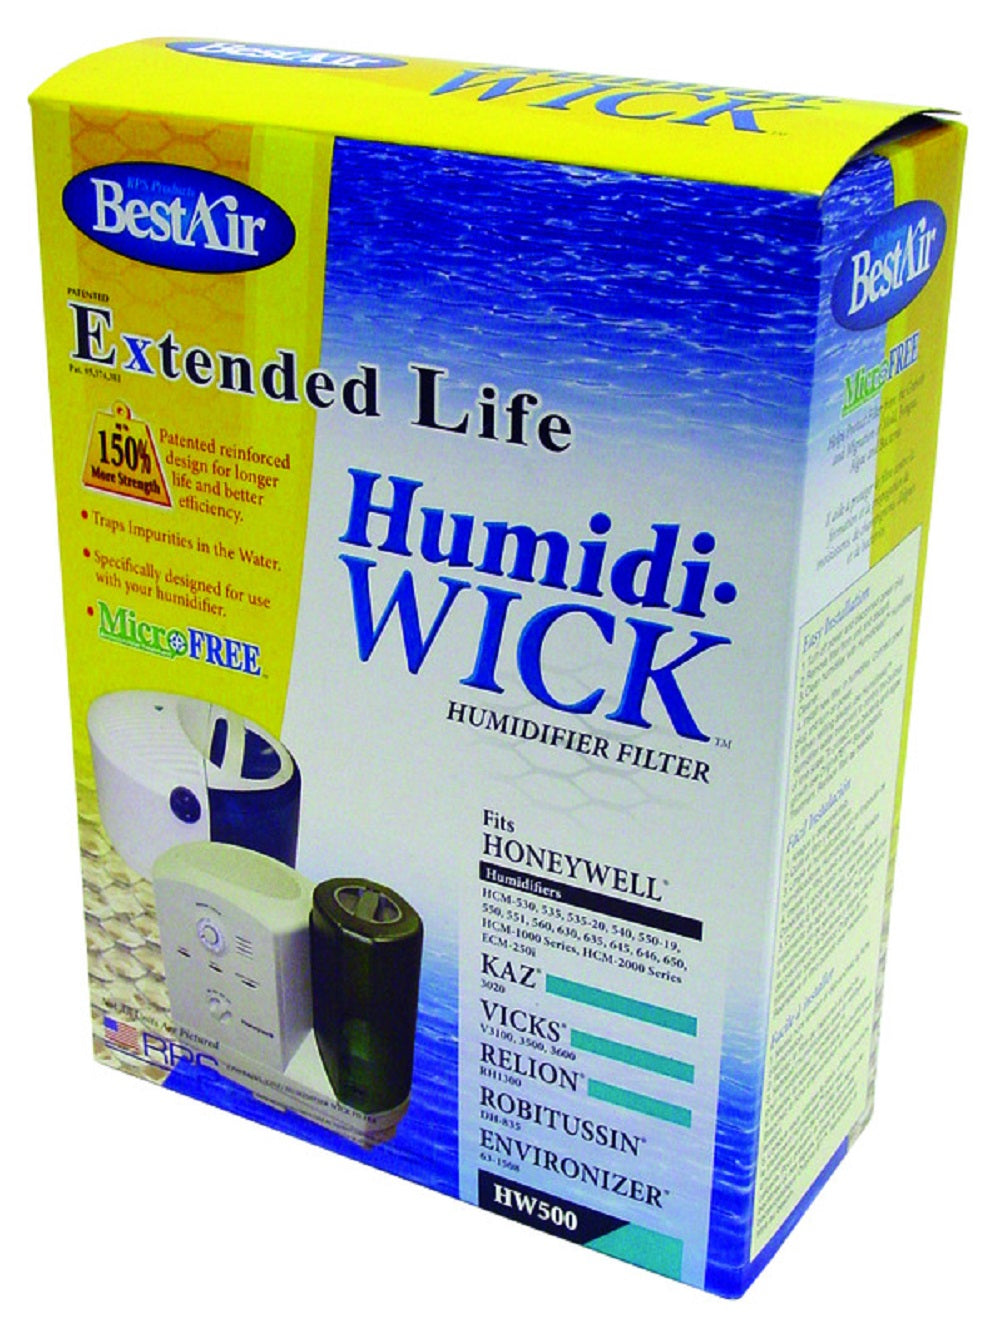 BestAir HW500 Humidifier Wick Filter, 5" x 19" x 1"